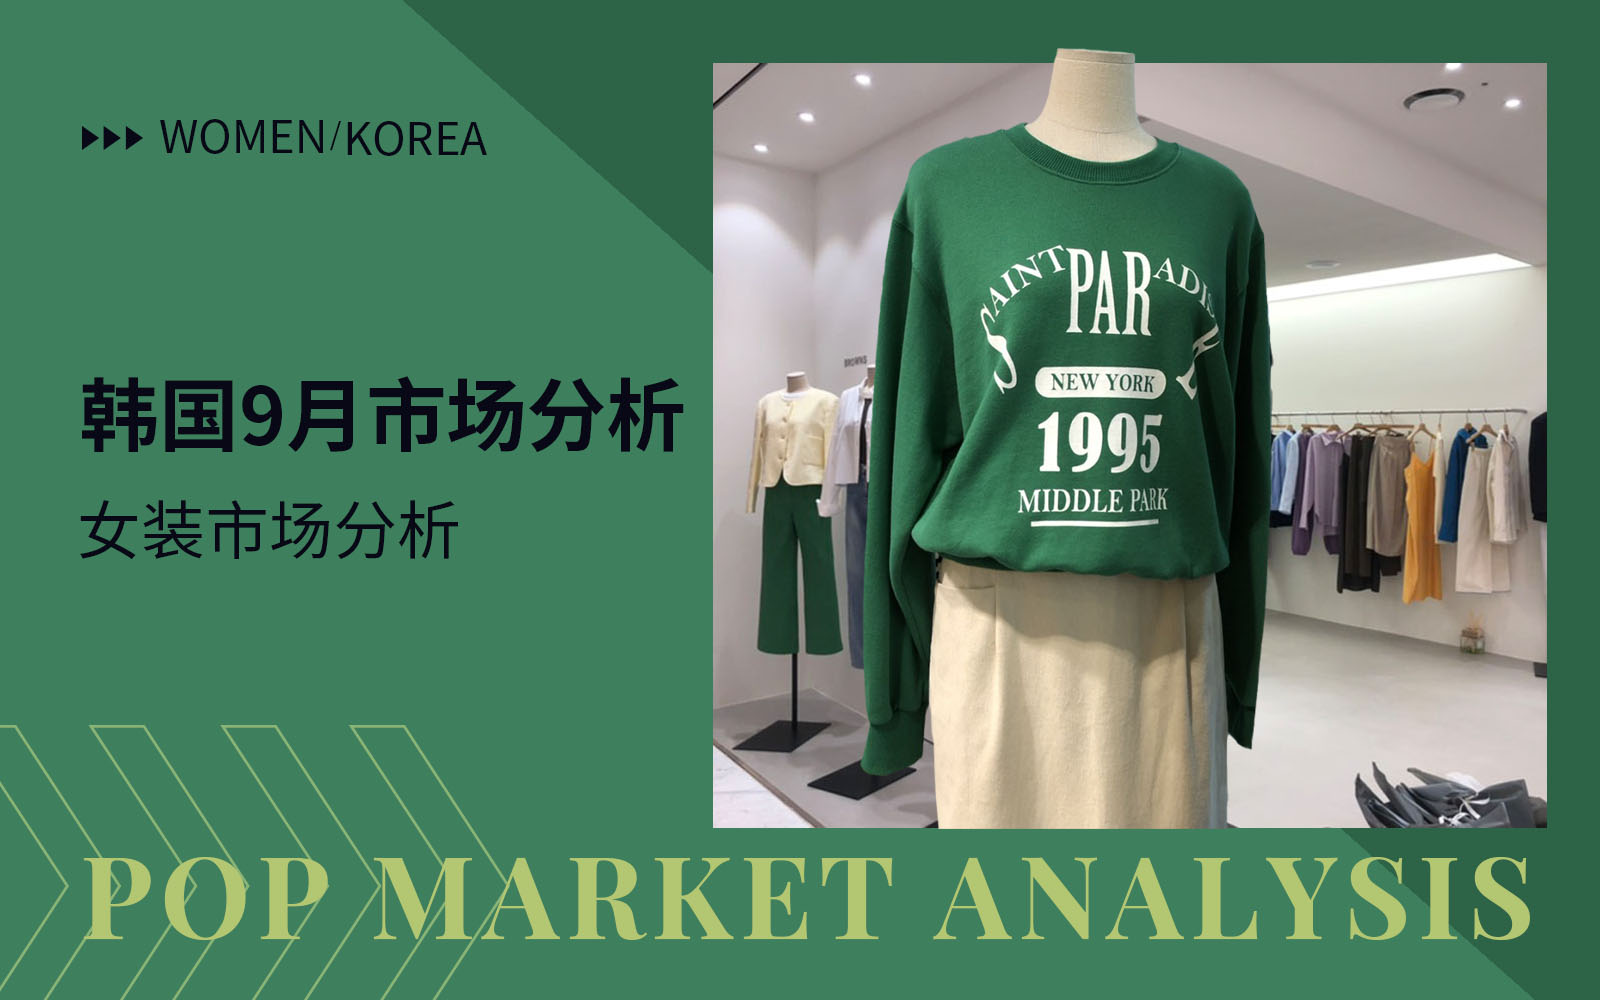 Youthful Varsity -- The Comprehensive Analysis of Korean Womenswear Market